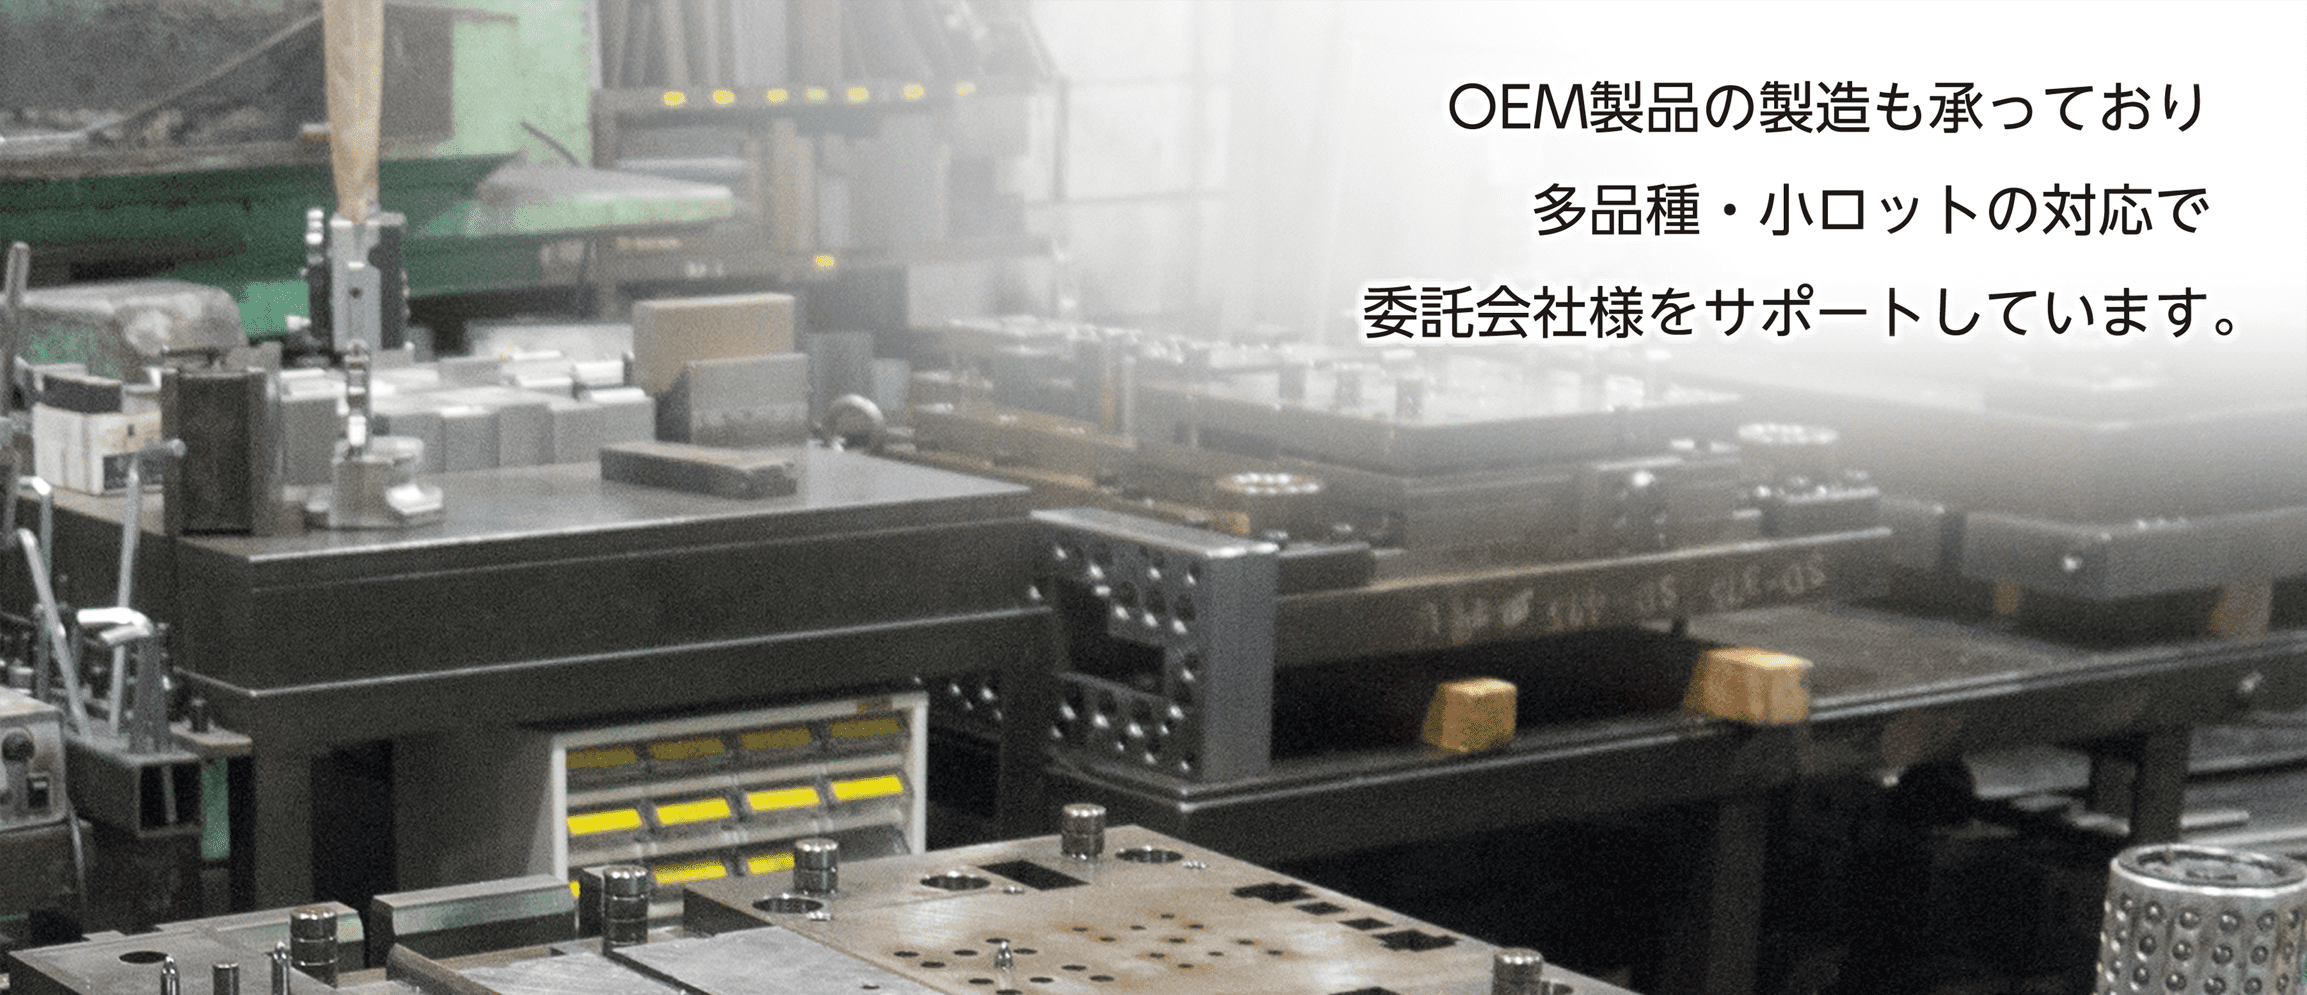 OEM製品の製造も承っており多品種・小ロットの対応で委託会社様をサポートしています。